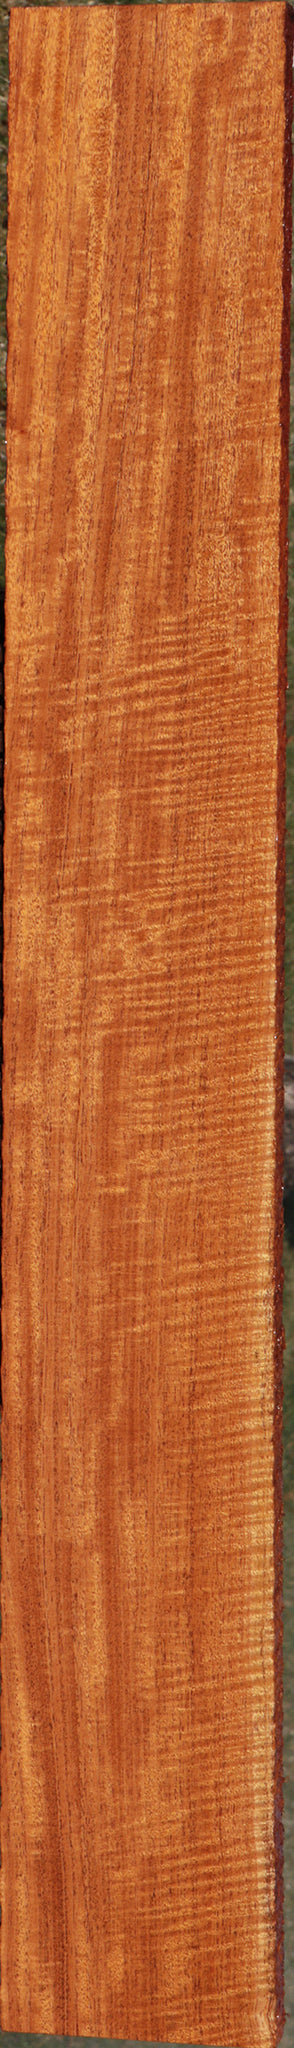 Quartersawn Honduras Mahogany Lumber